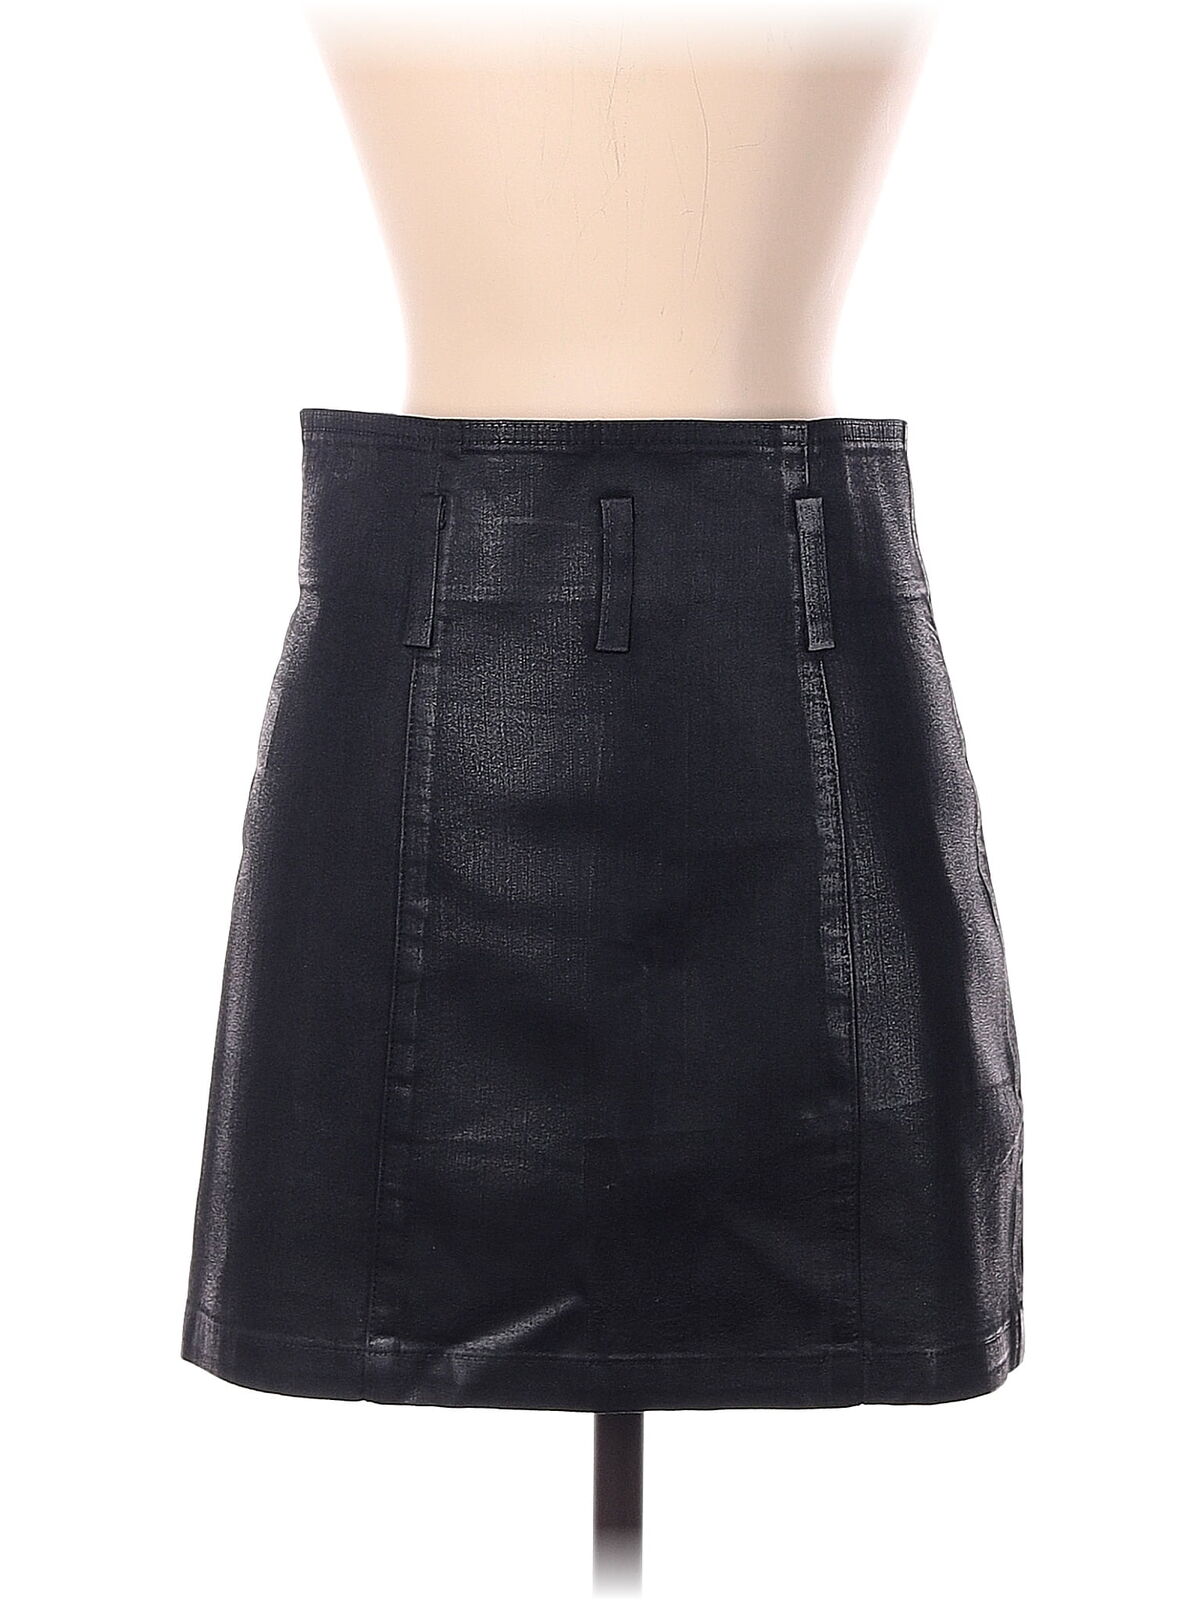 Carmar Women Black Faux Leather Skirt 26W - image 2